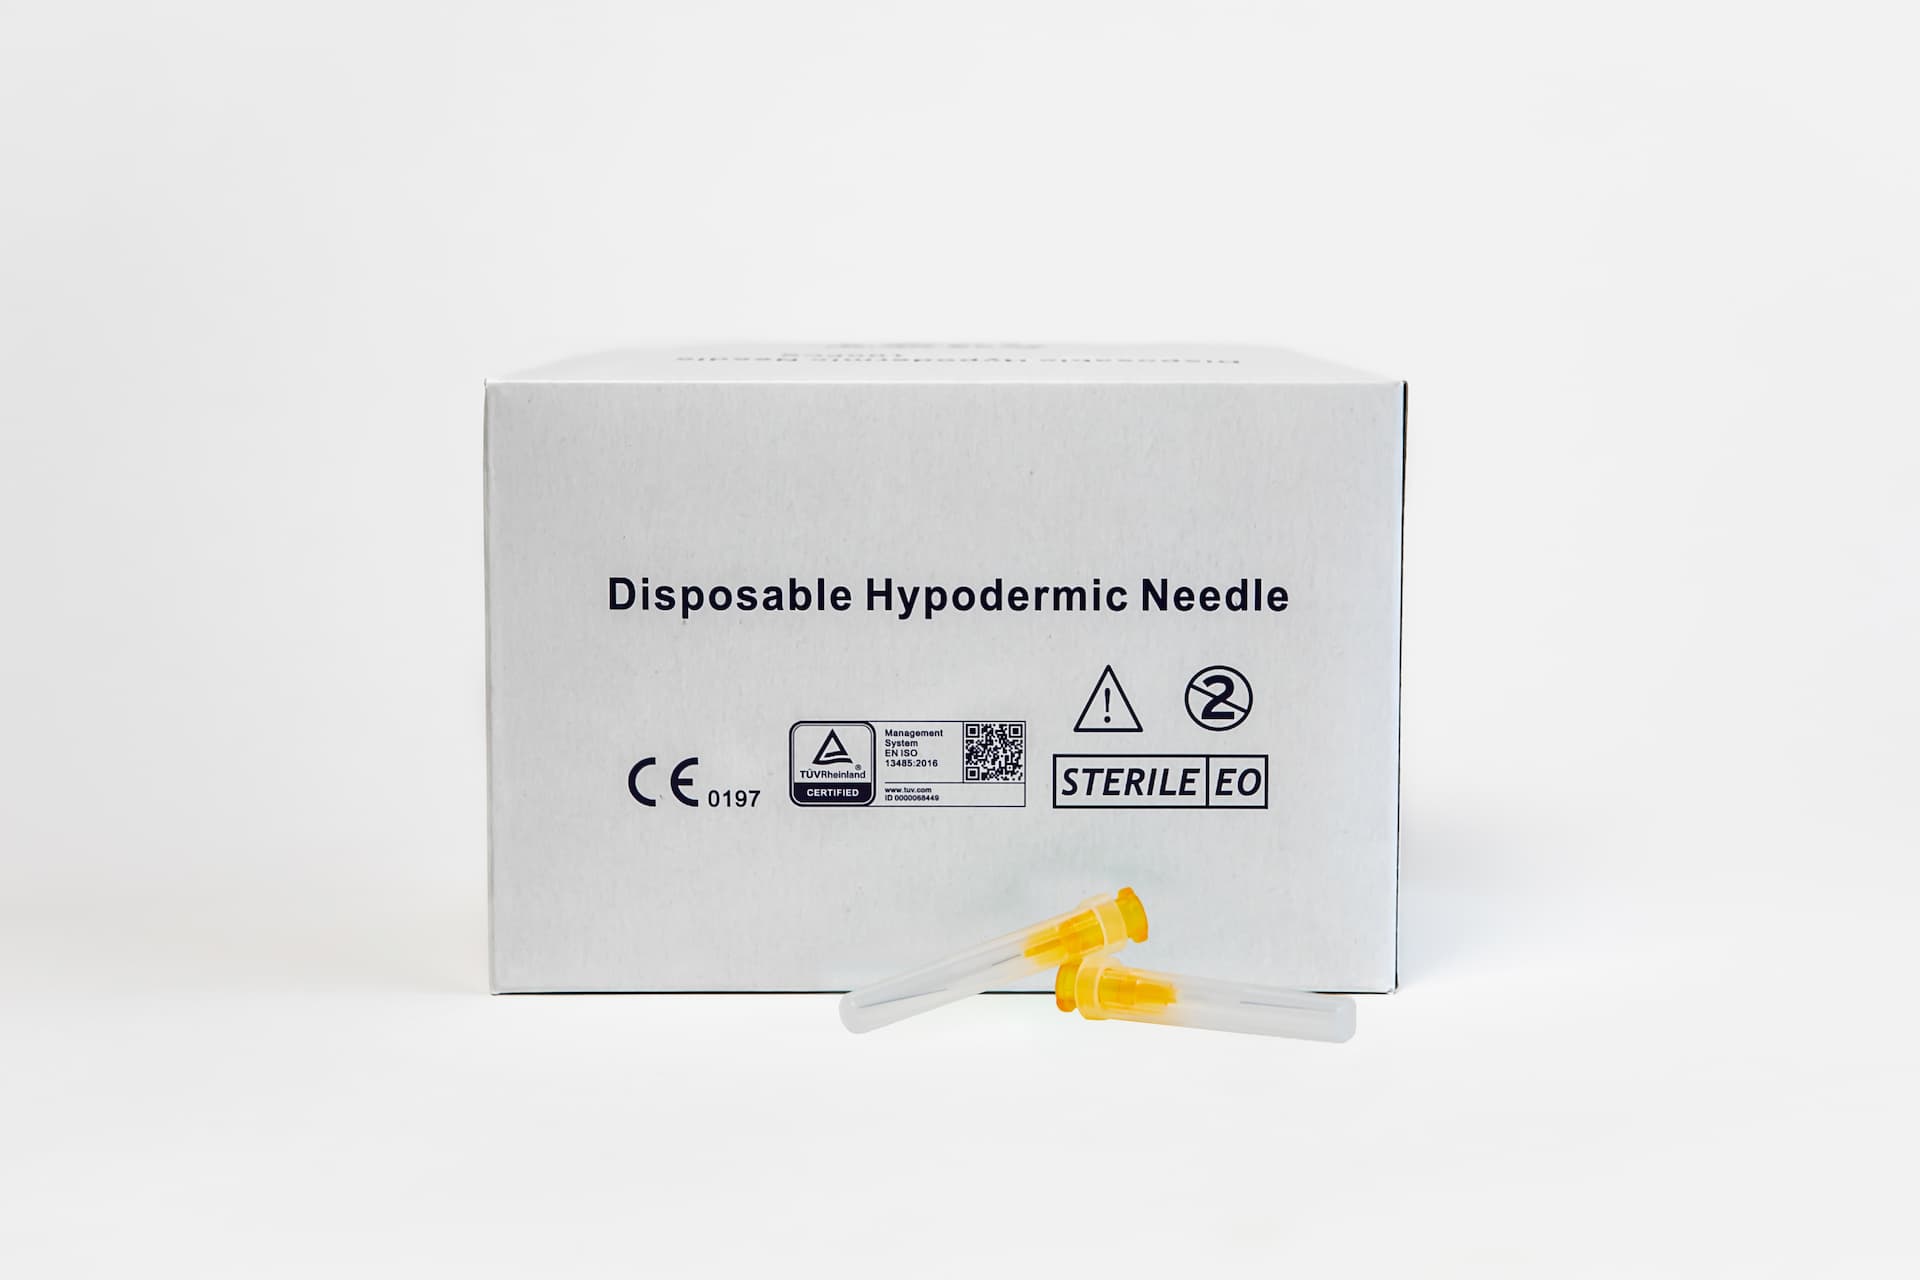 34 Gauge 4mm (0.16 inch) Hypodermic needles